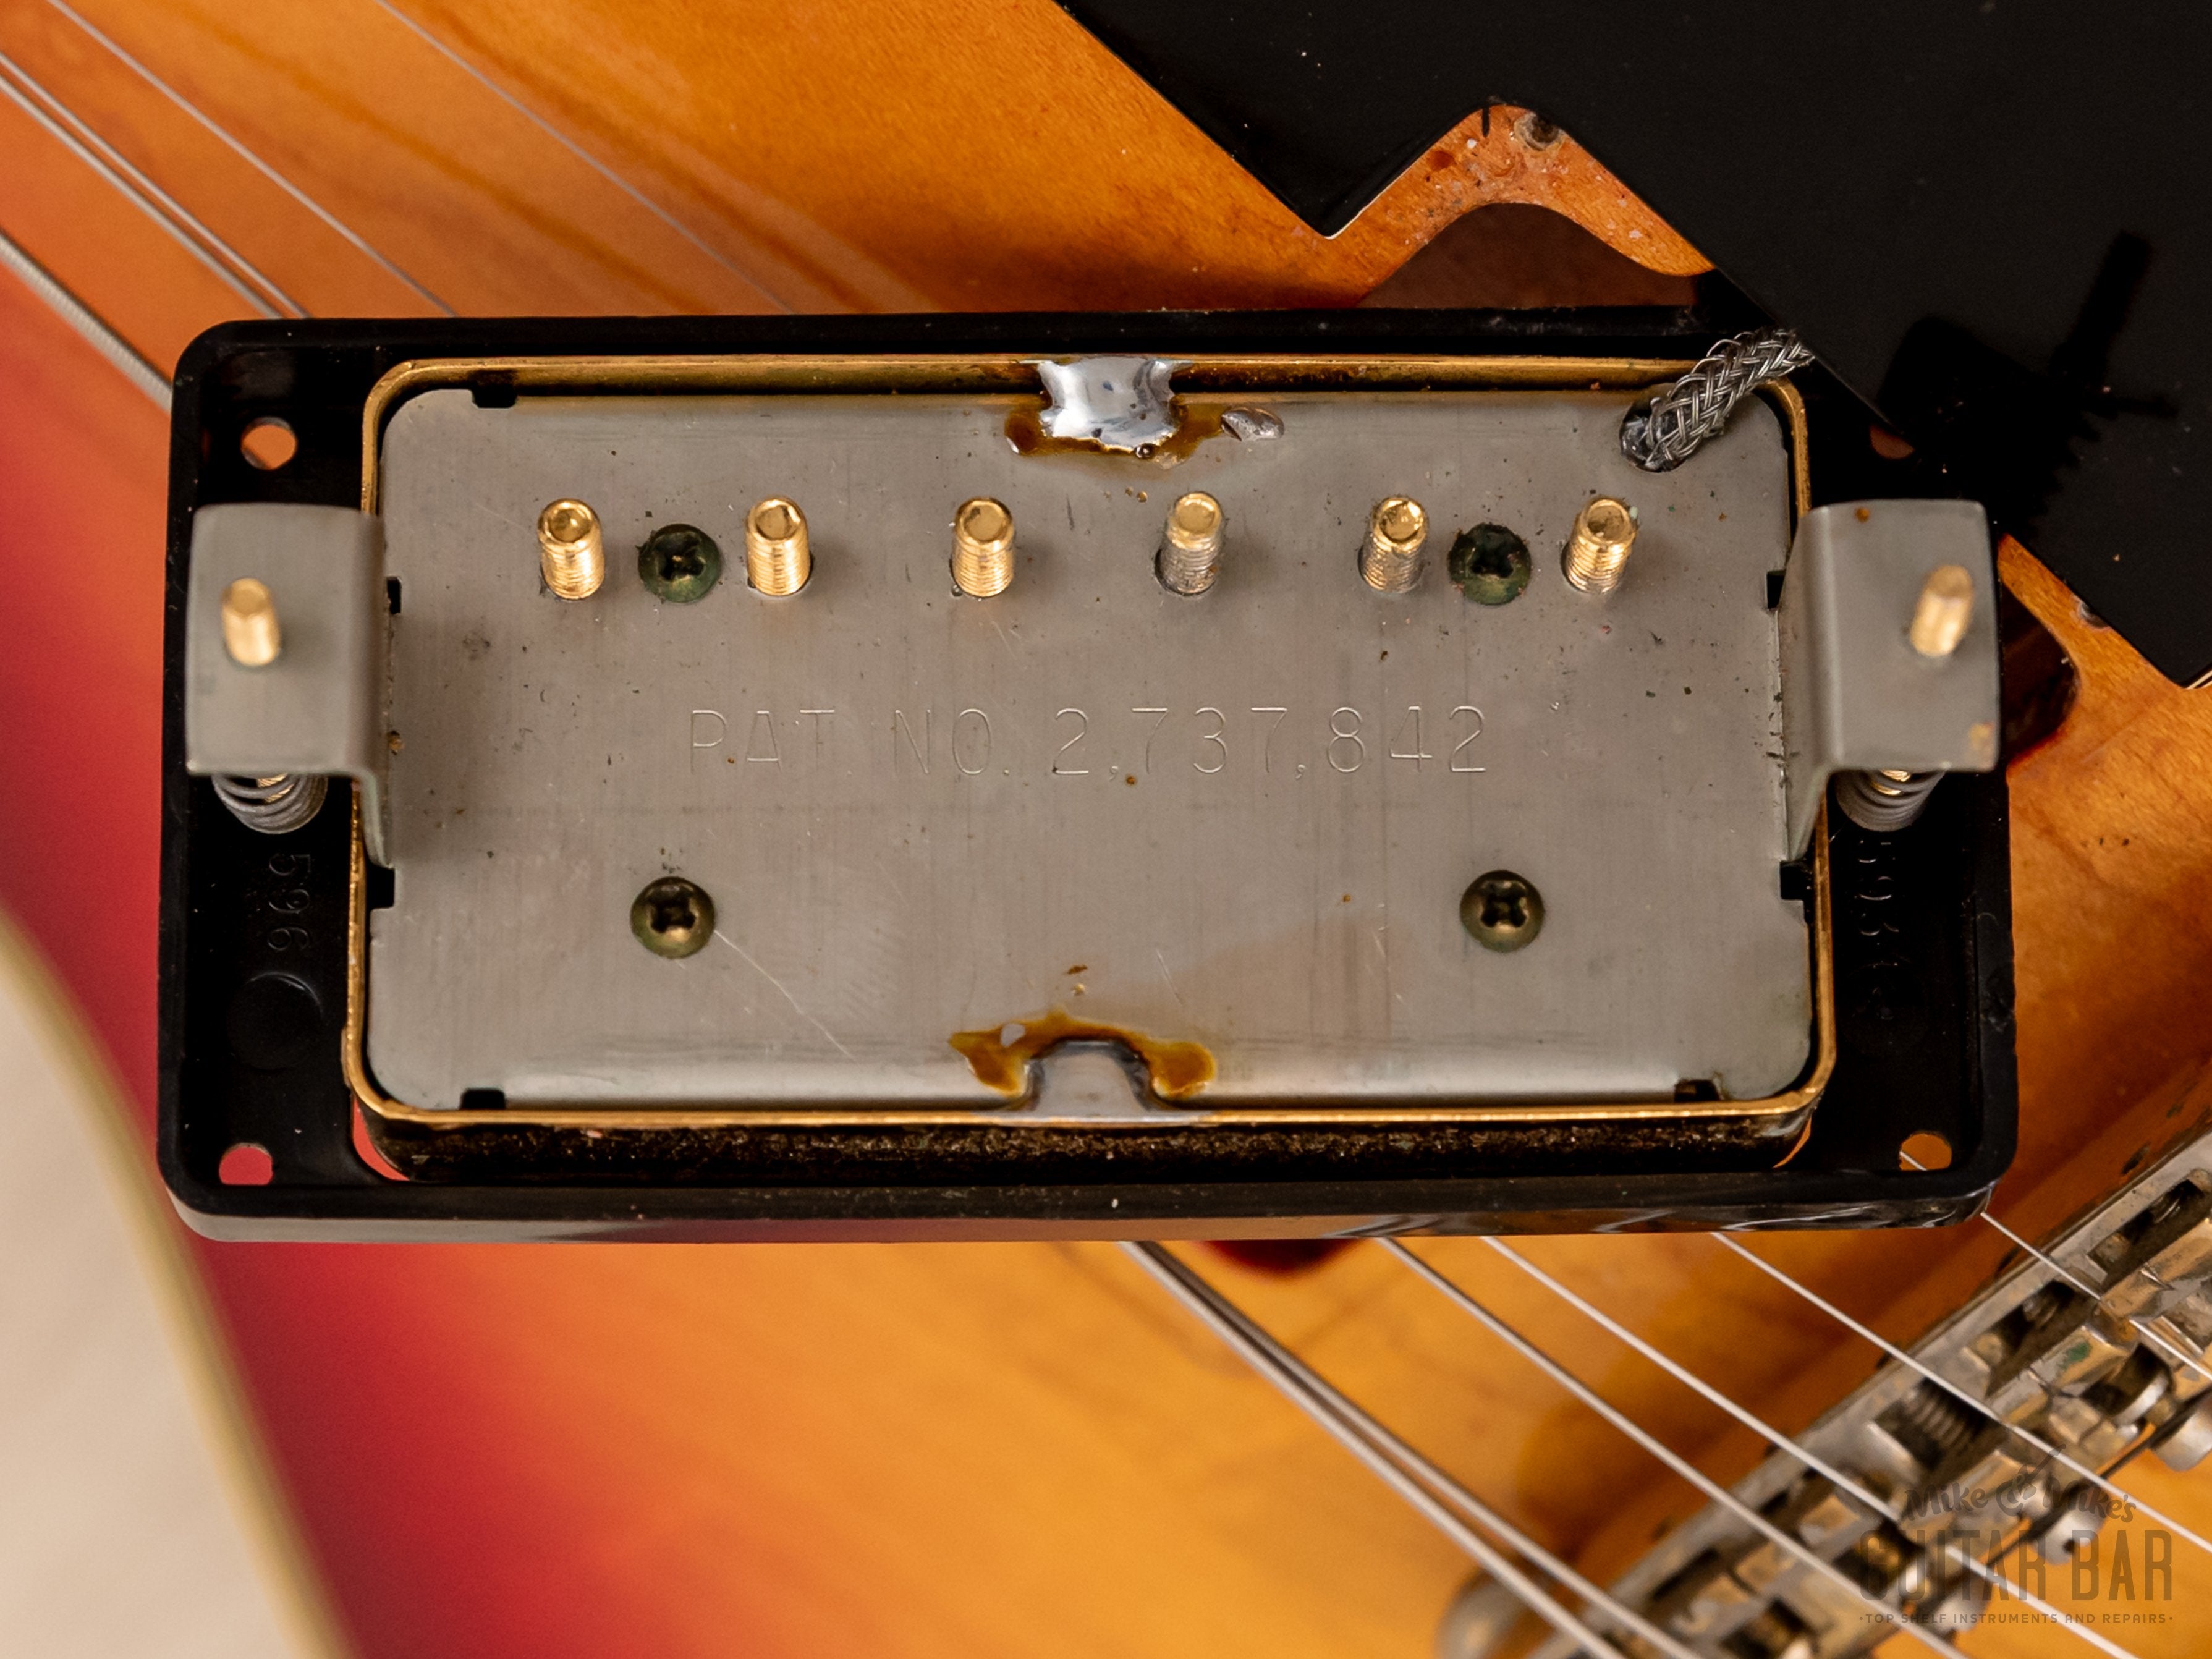 1975 Gibson Les Paul Custom Cherry Sunburst 100% Original w/ T-Tops, Big Neck, Case